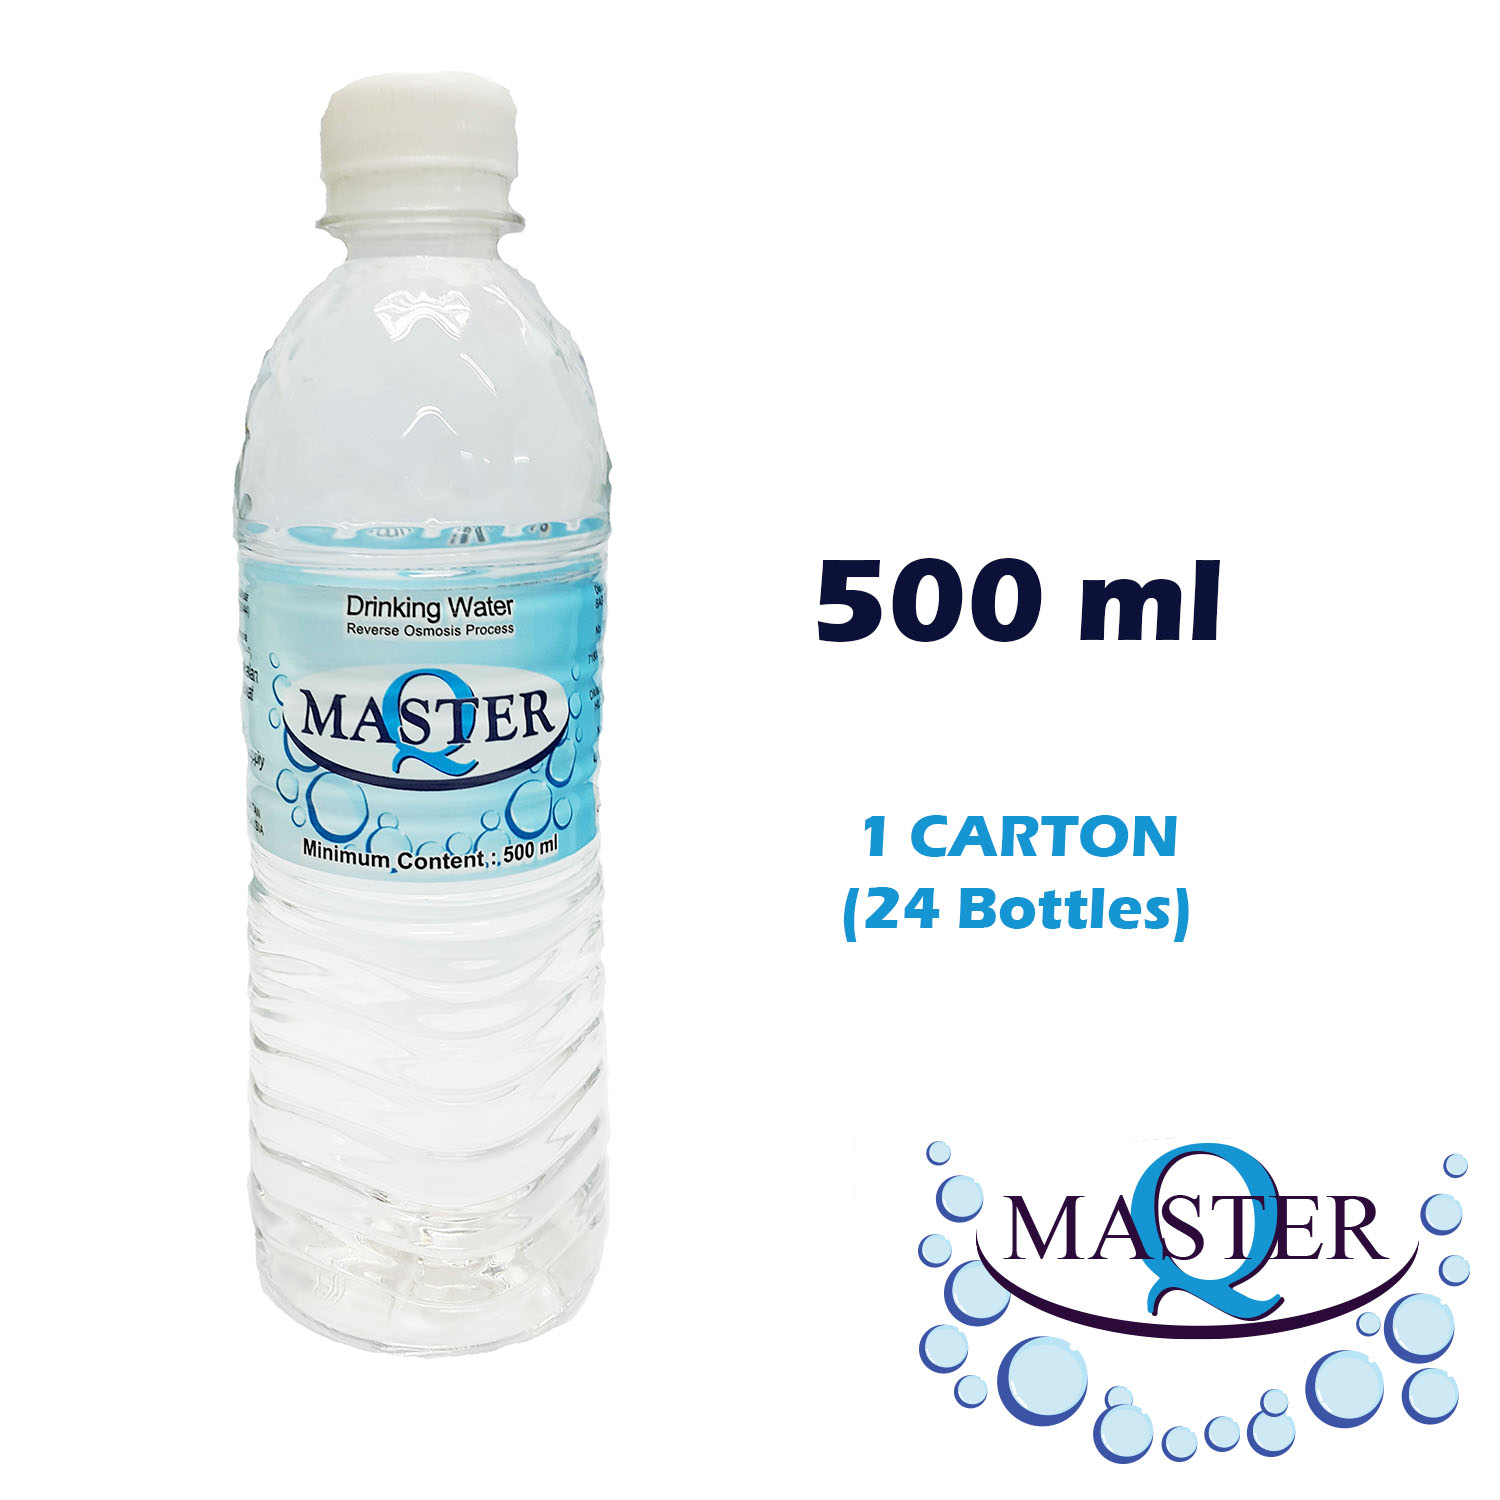 MASTER Q Reverse Osmosis Drinking Water 500ml (24 Units Per Carton)